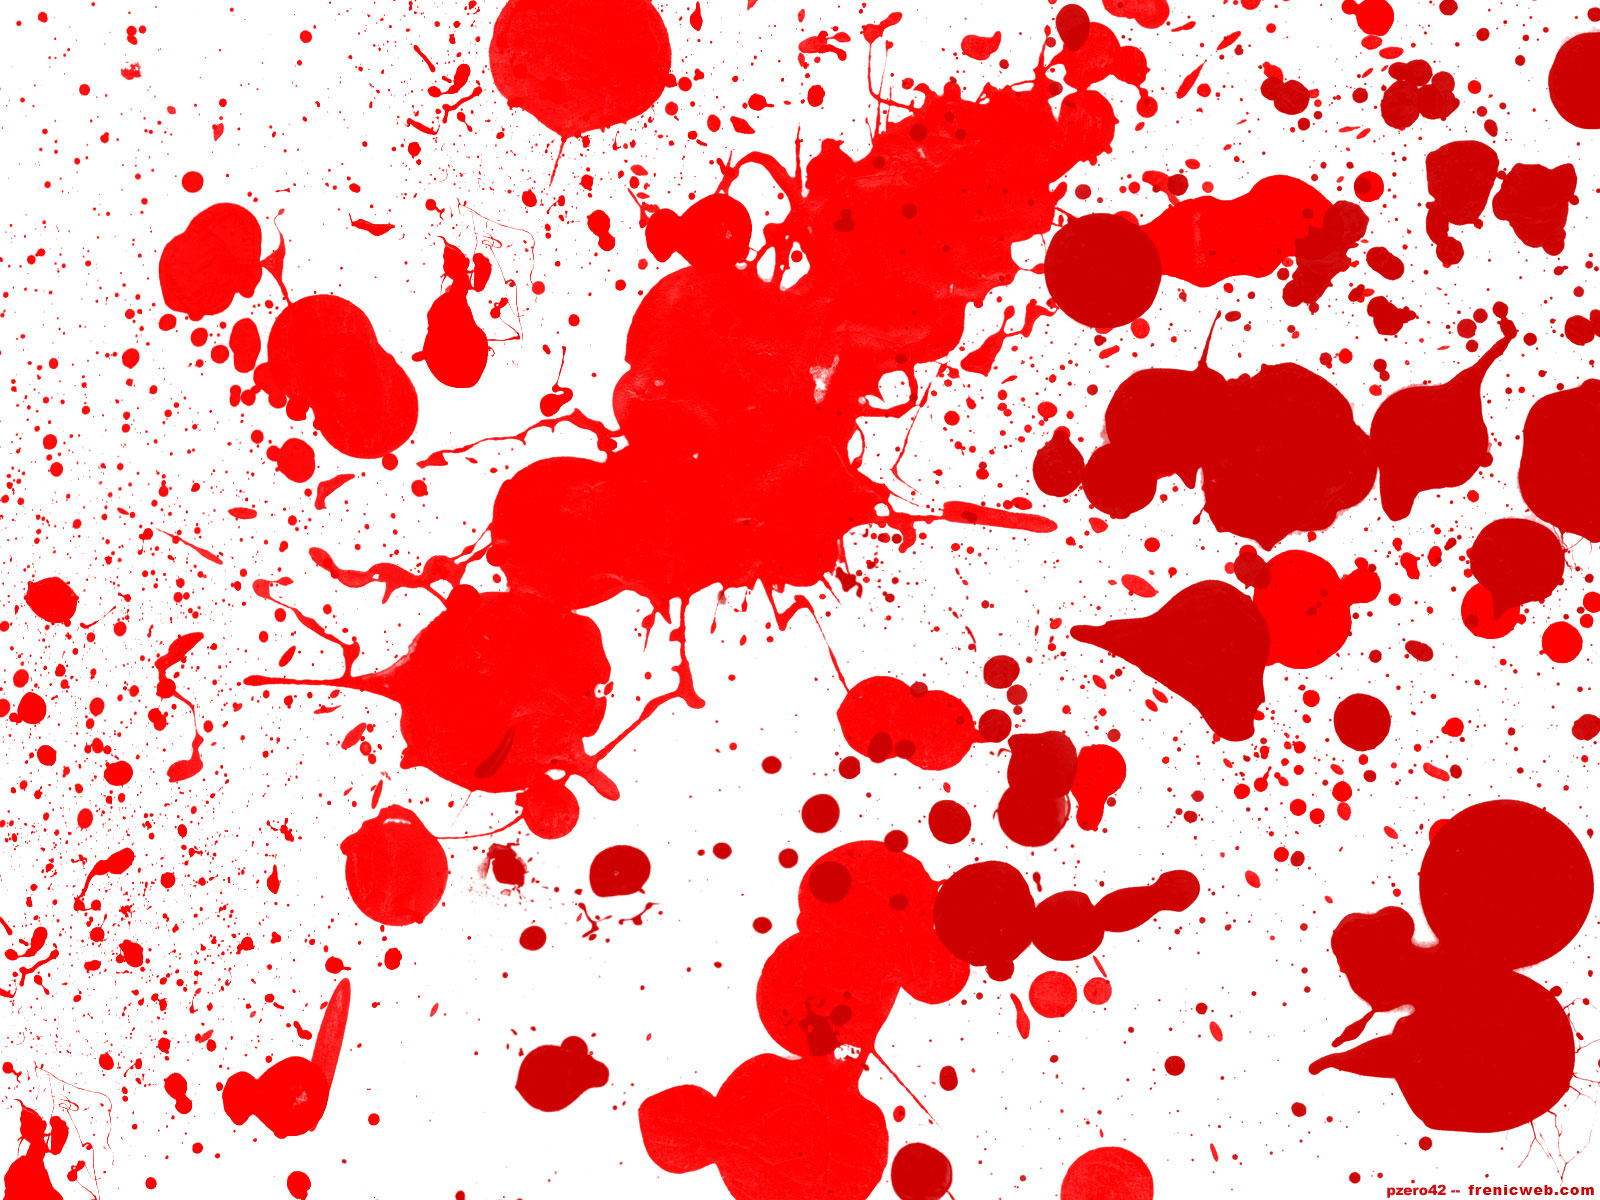 blood spill clipart - photo #23